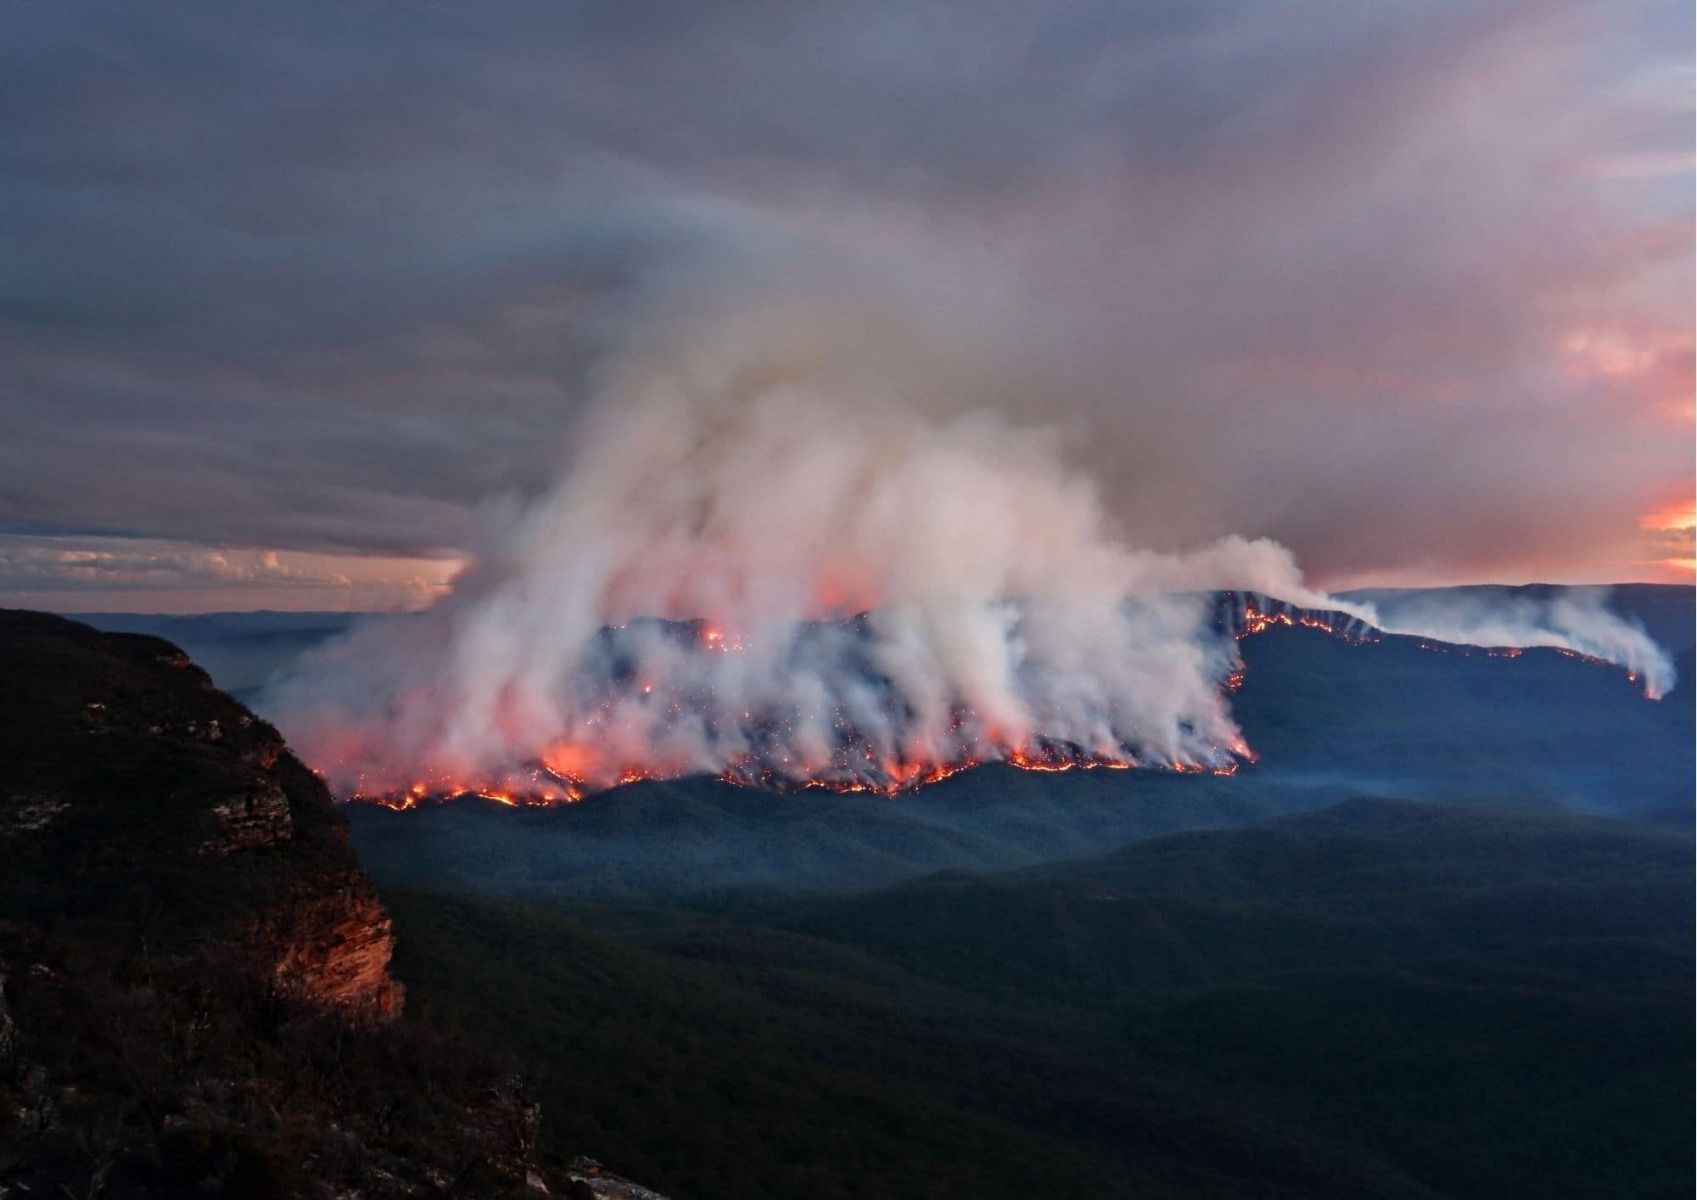 Bushfires cause respiratory problems